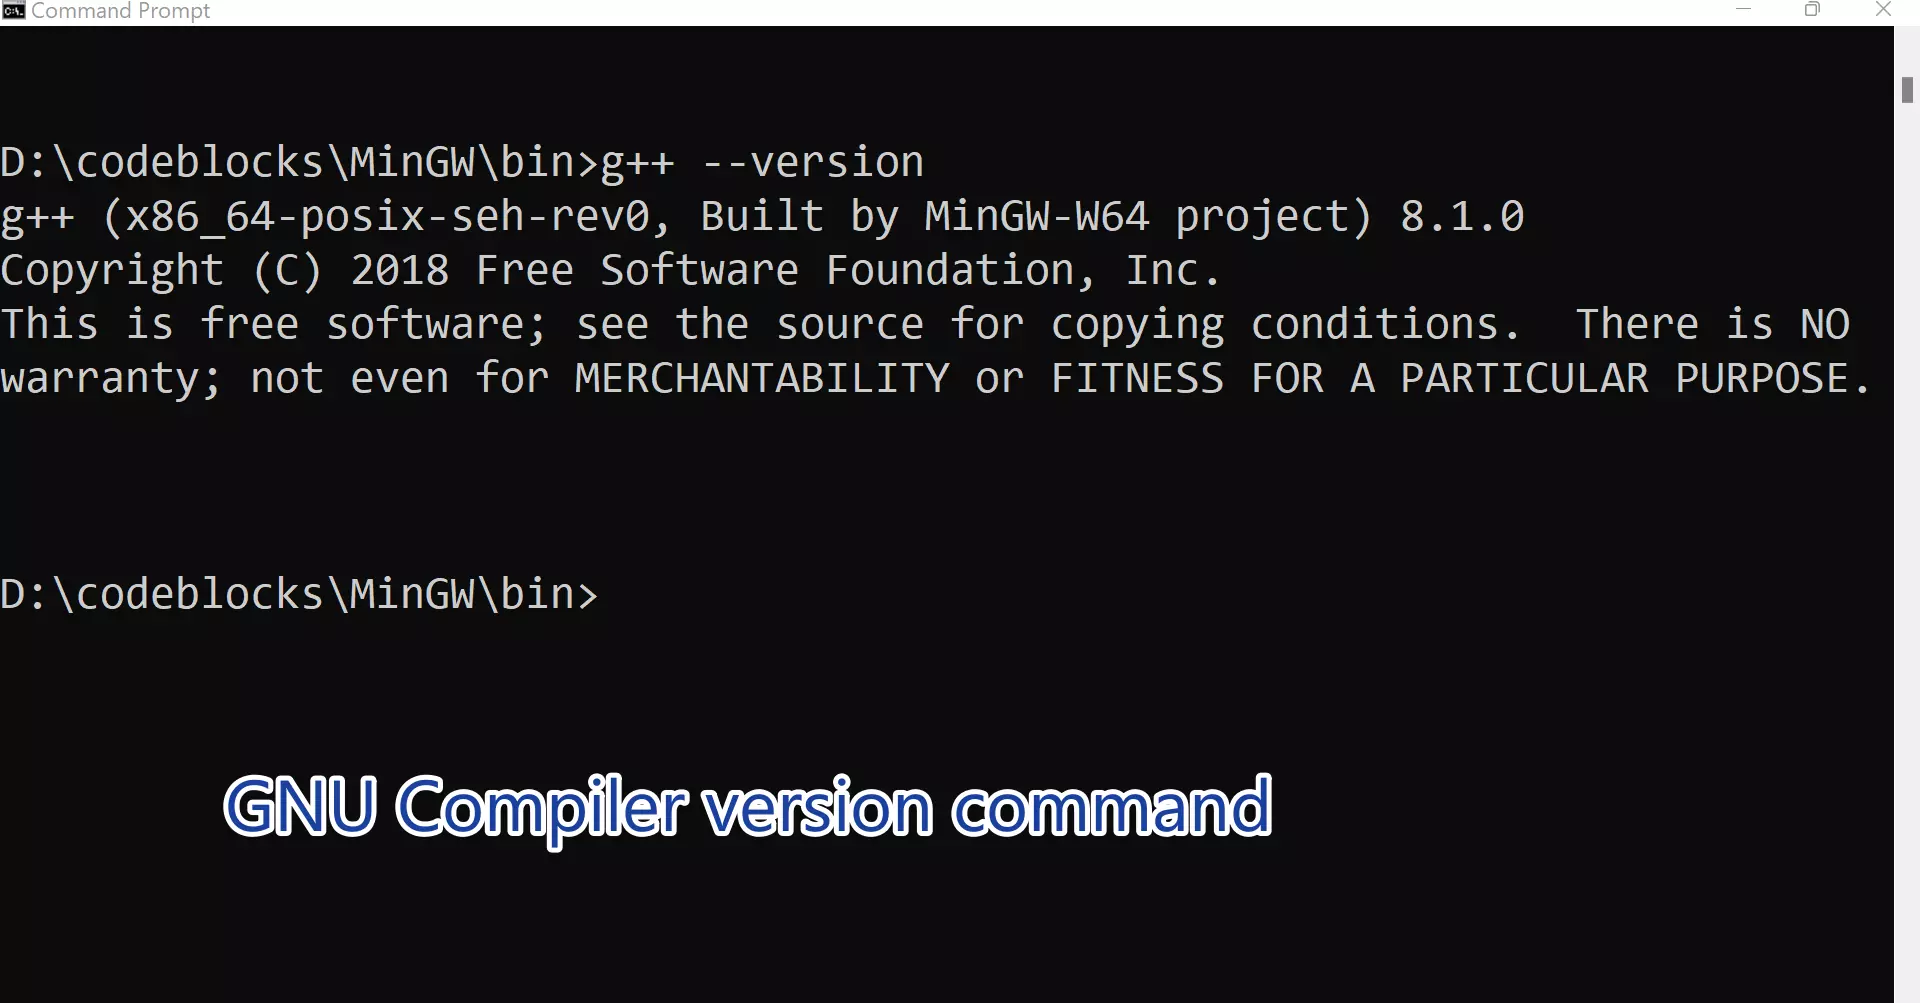 GNU Compiler version command